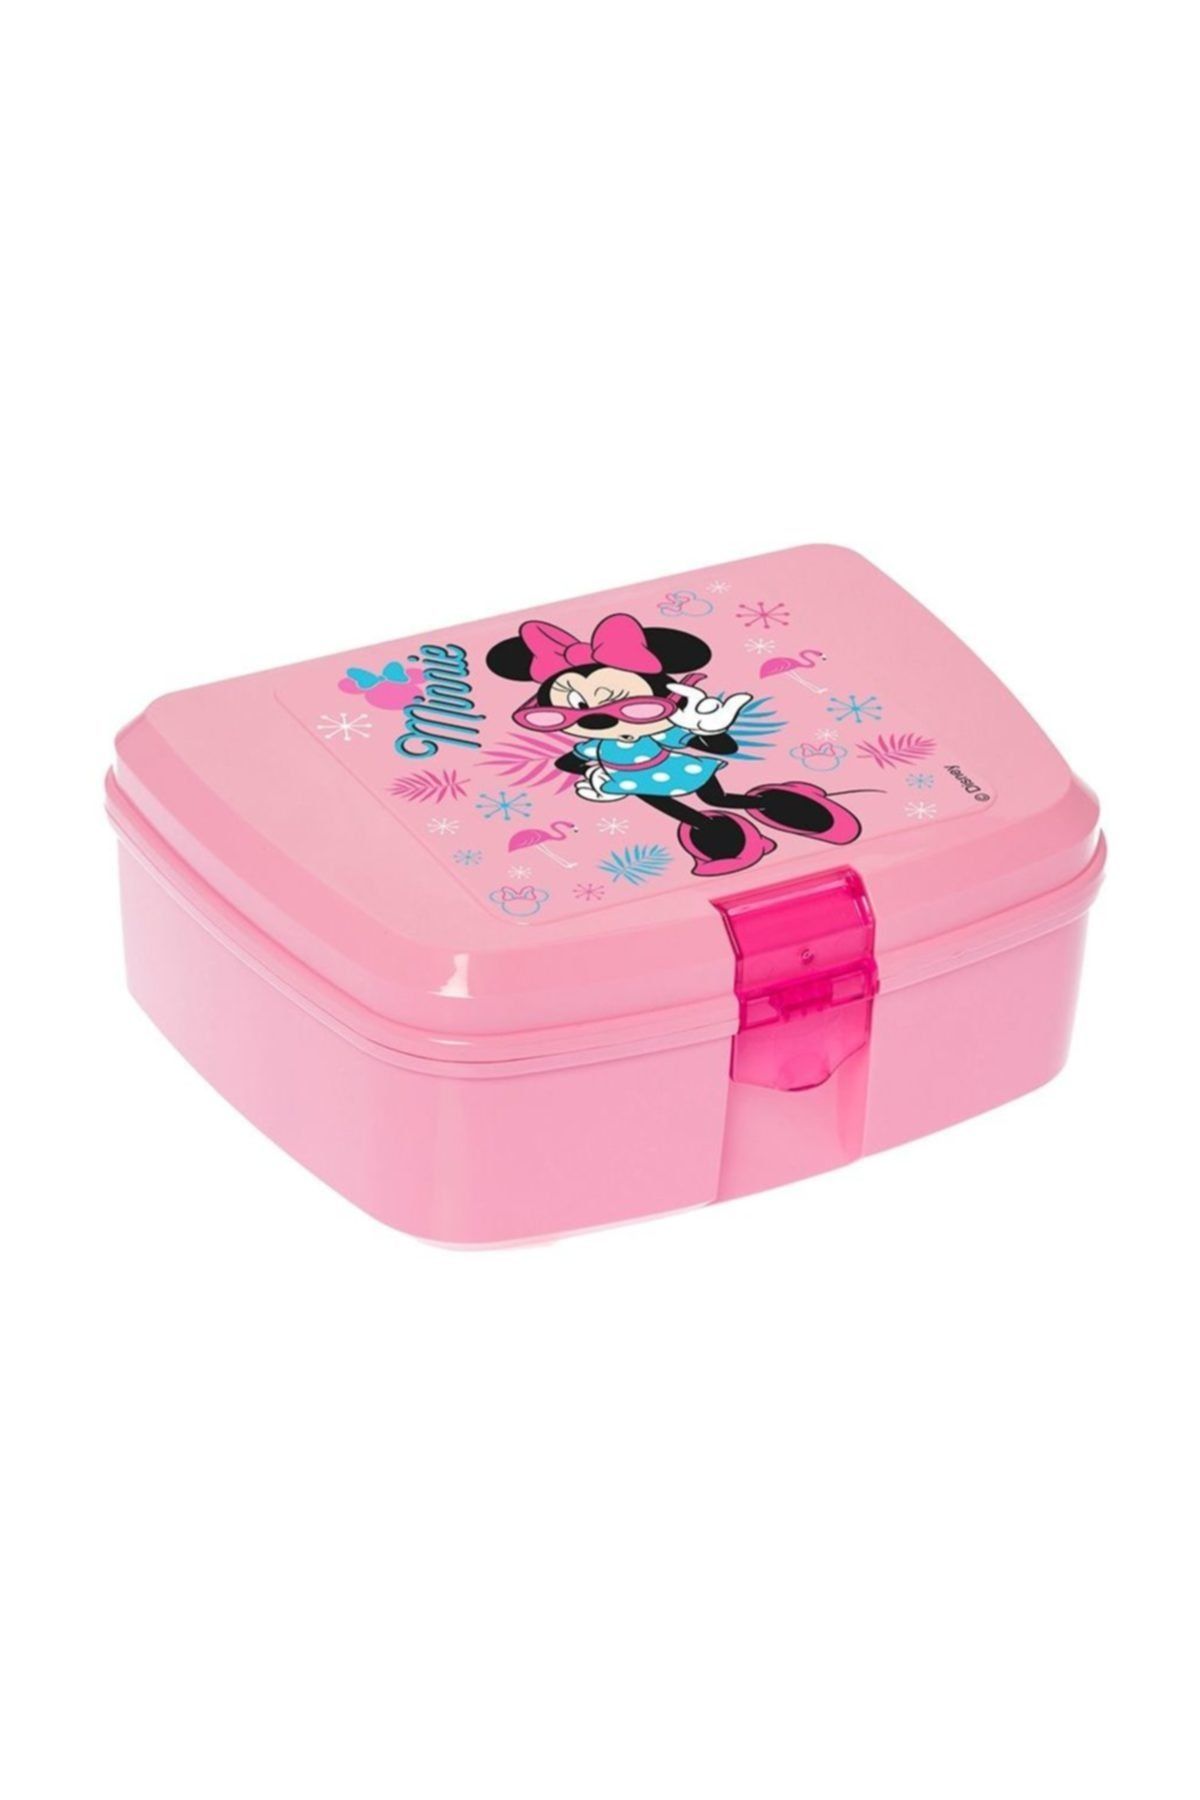 Herevin Kız Çocuk Pembe Gözlüklü Minnie Mouse Pembe Beslenme Kutusu -